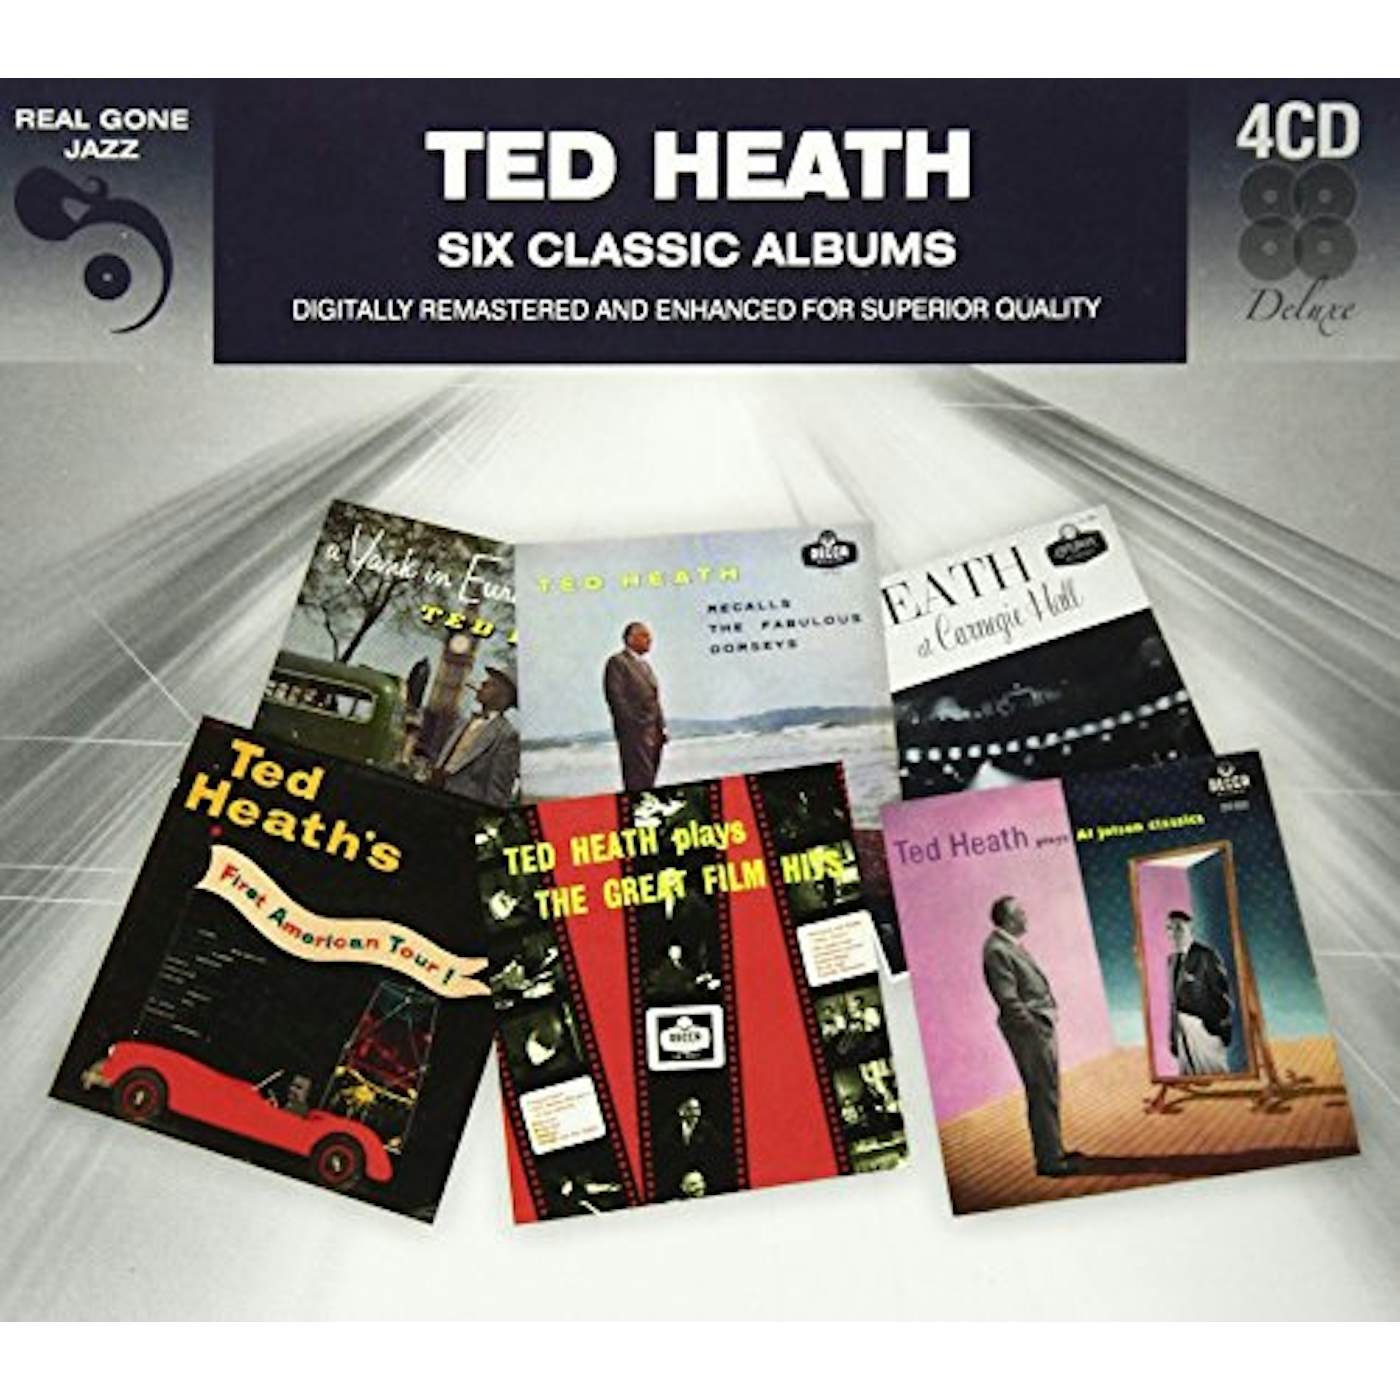 Ted Heath 6 CLASSIC ALBUMS CD